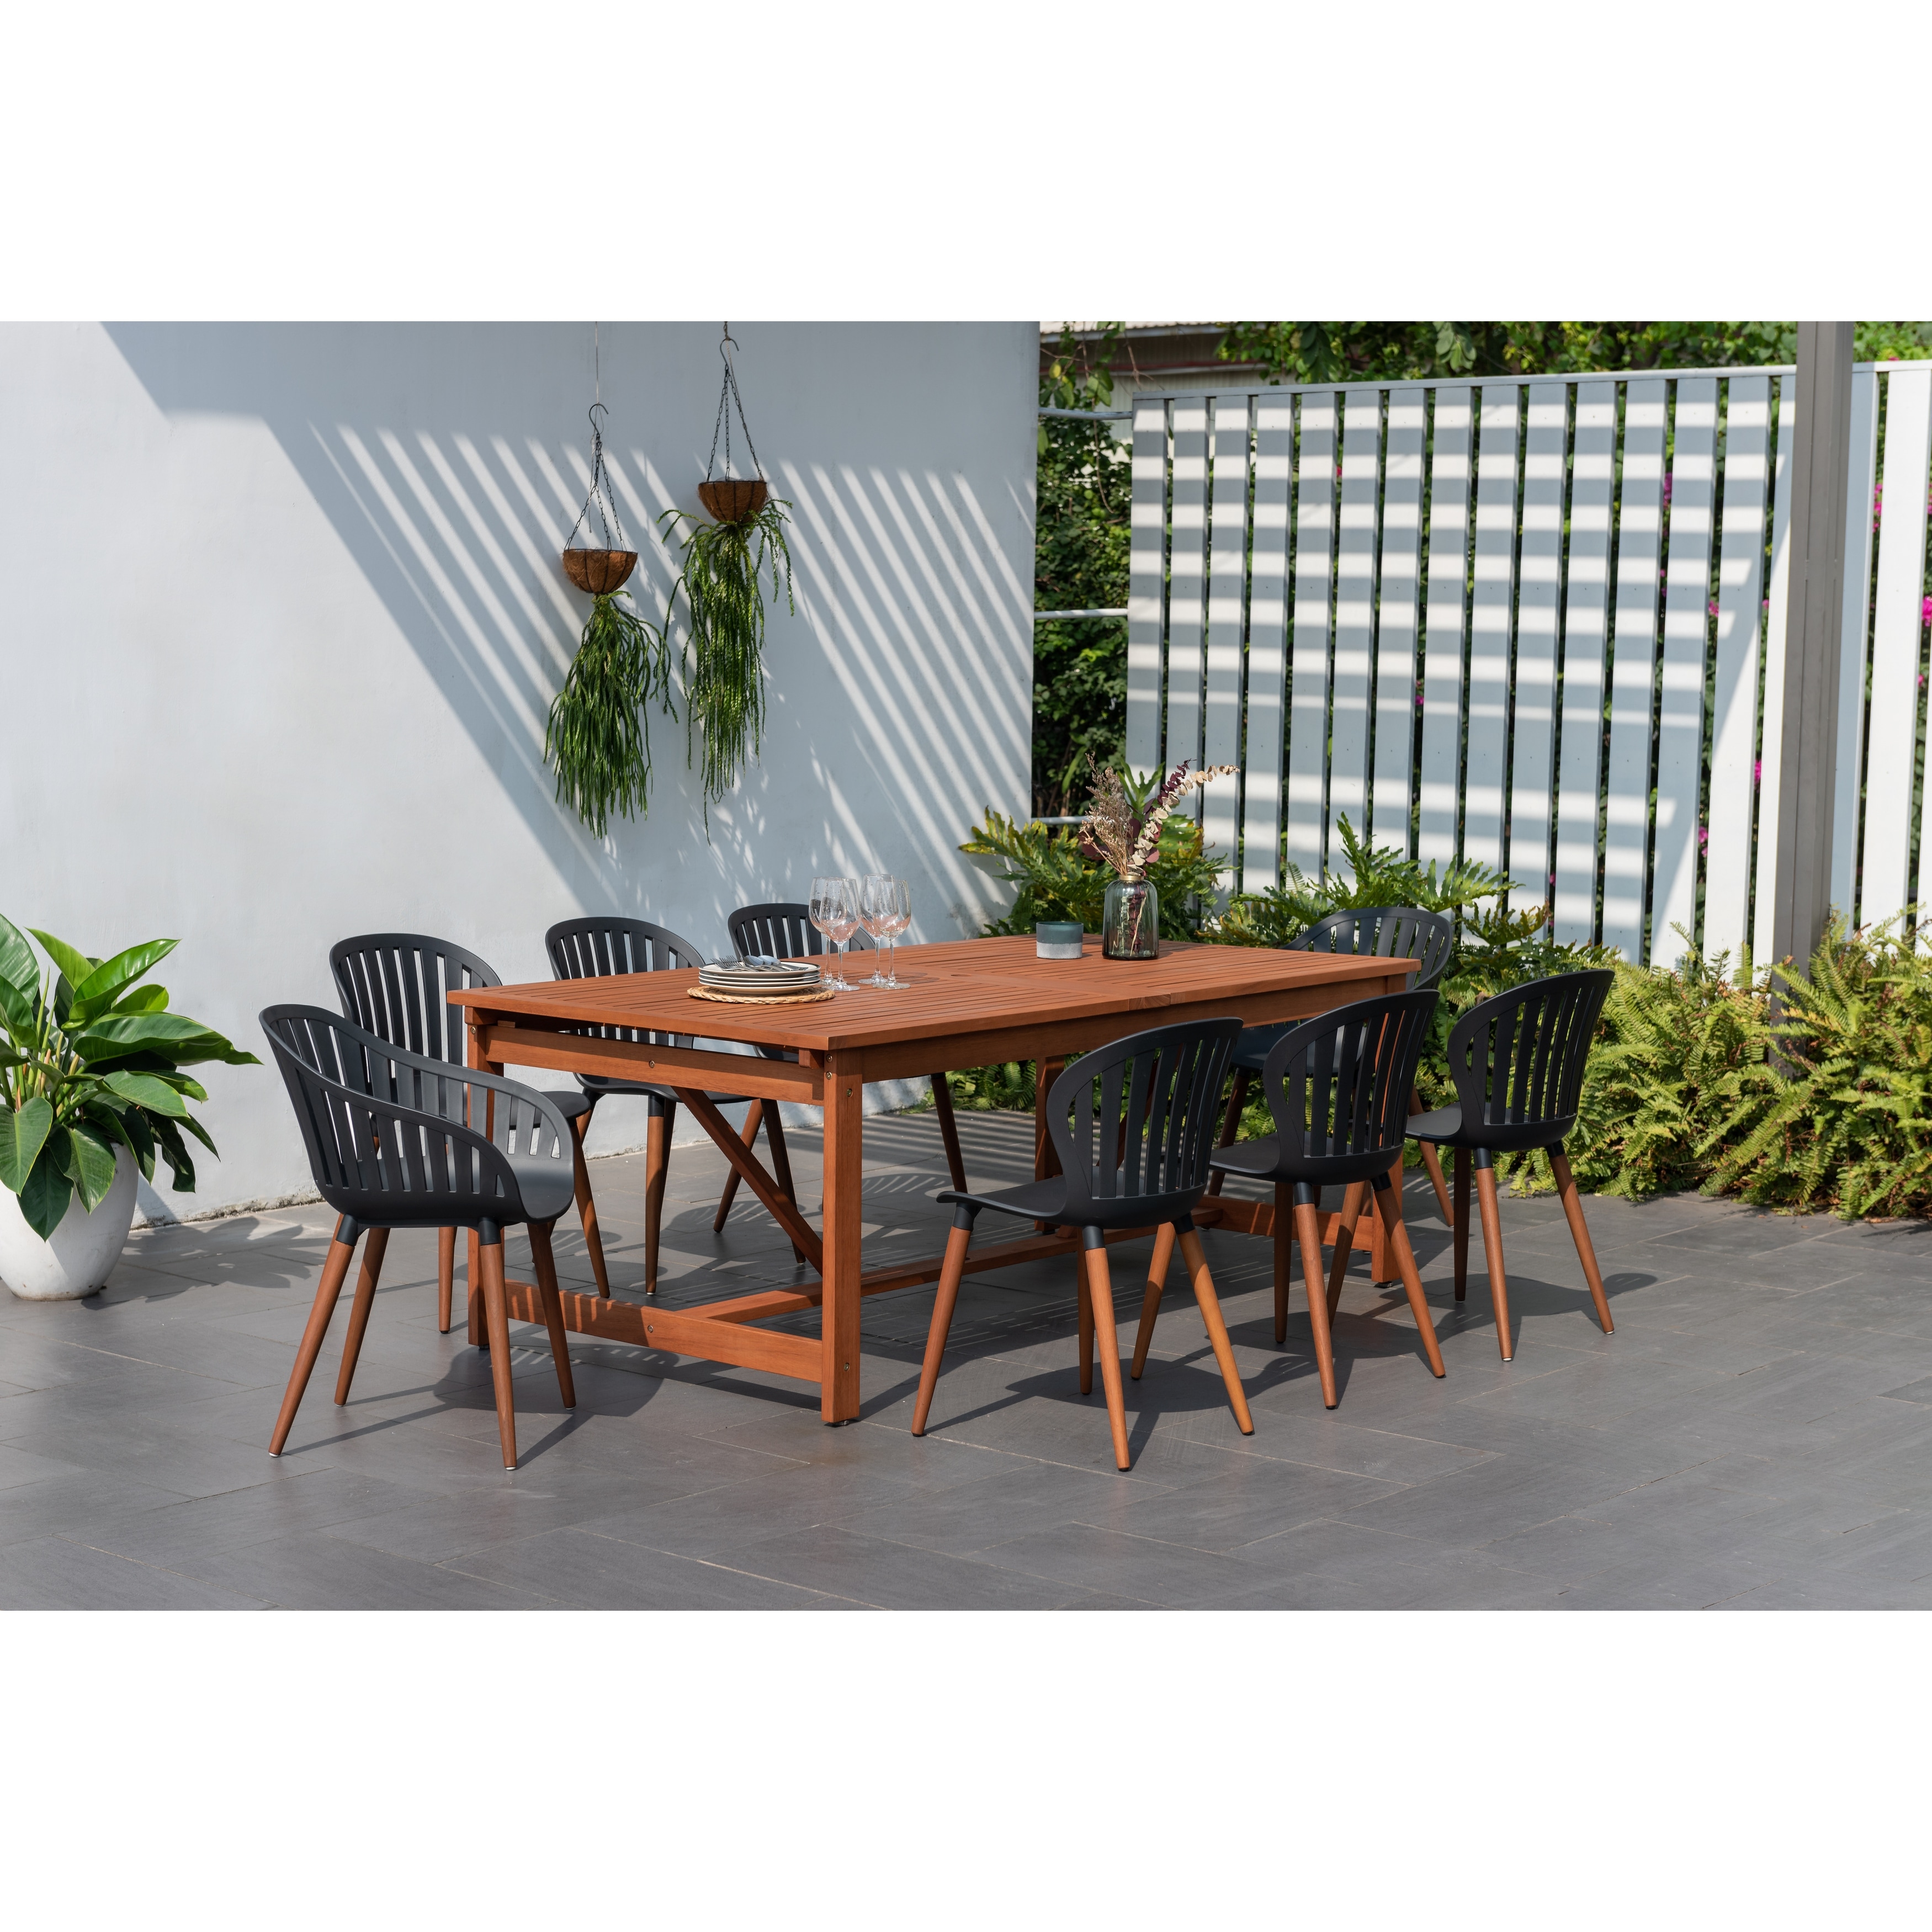 Amazonia Rawlins 9pc 100 Fsc Wood Outdoor Patio Dining Set